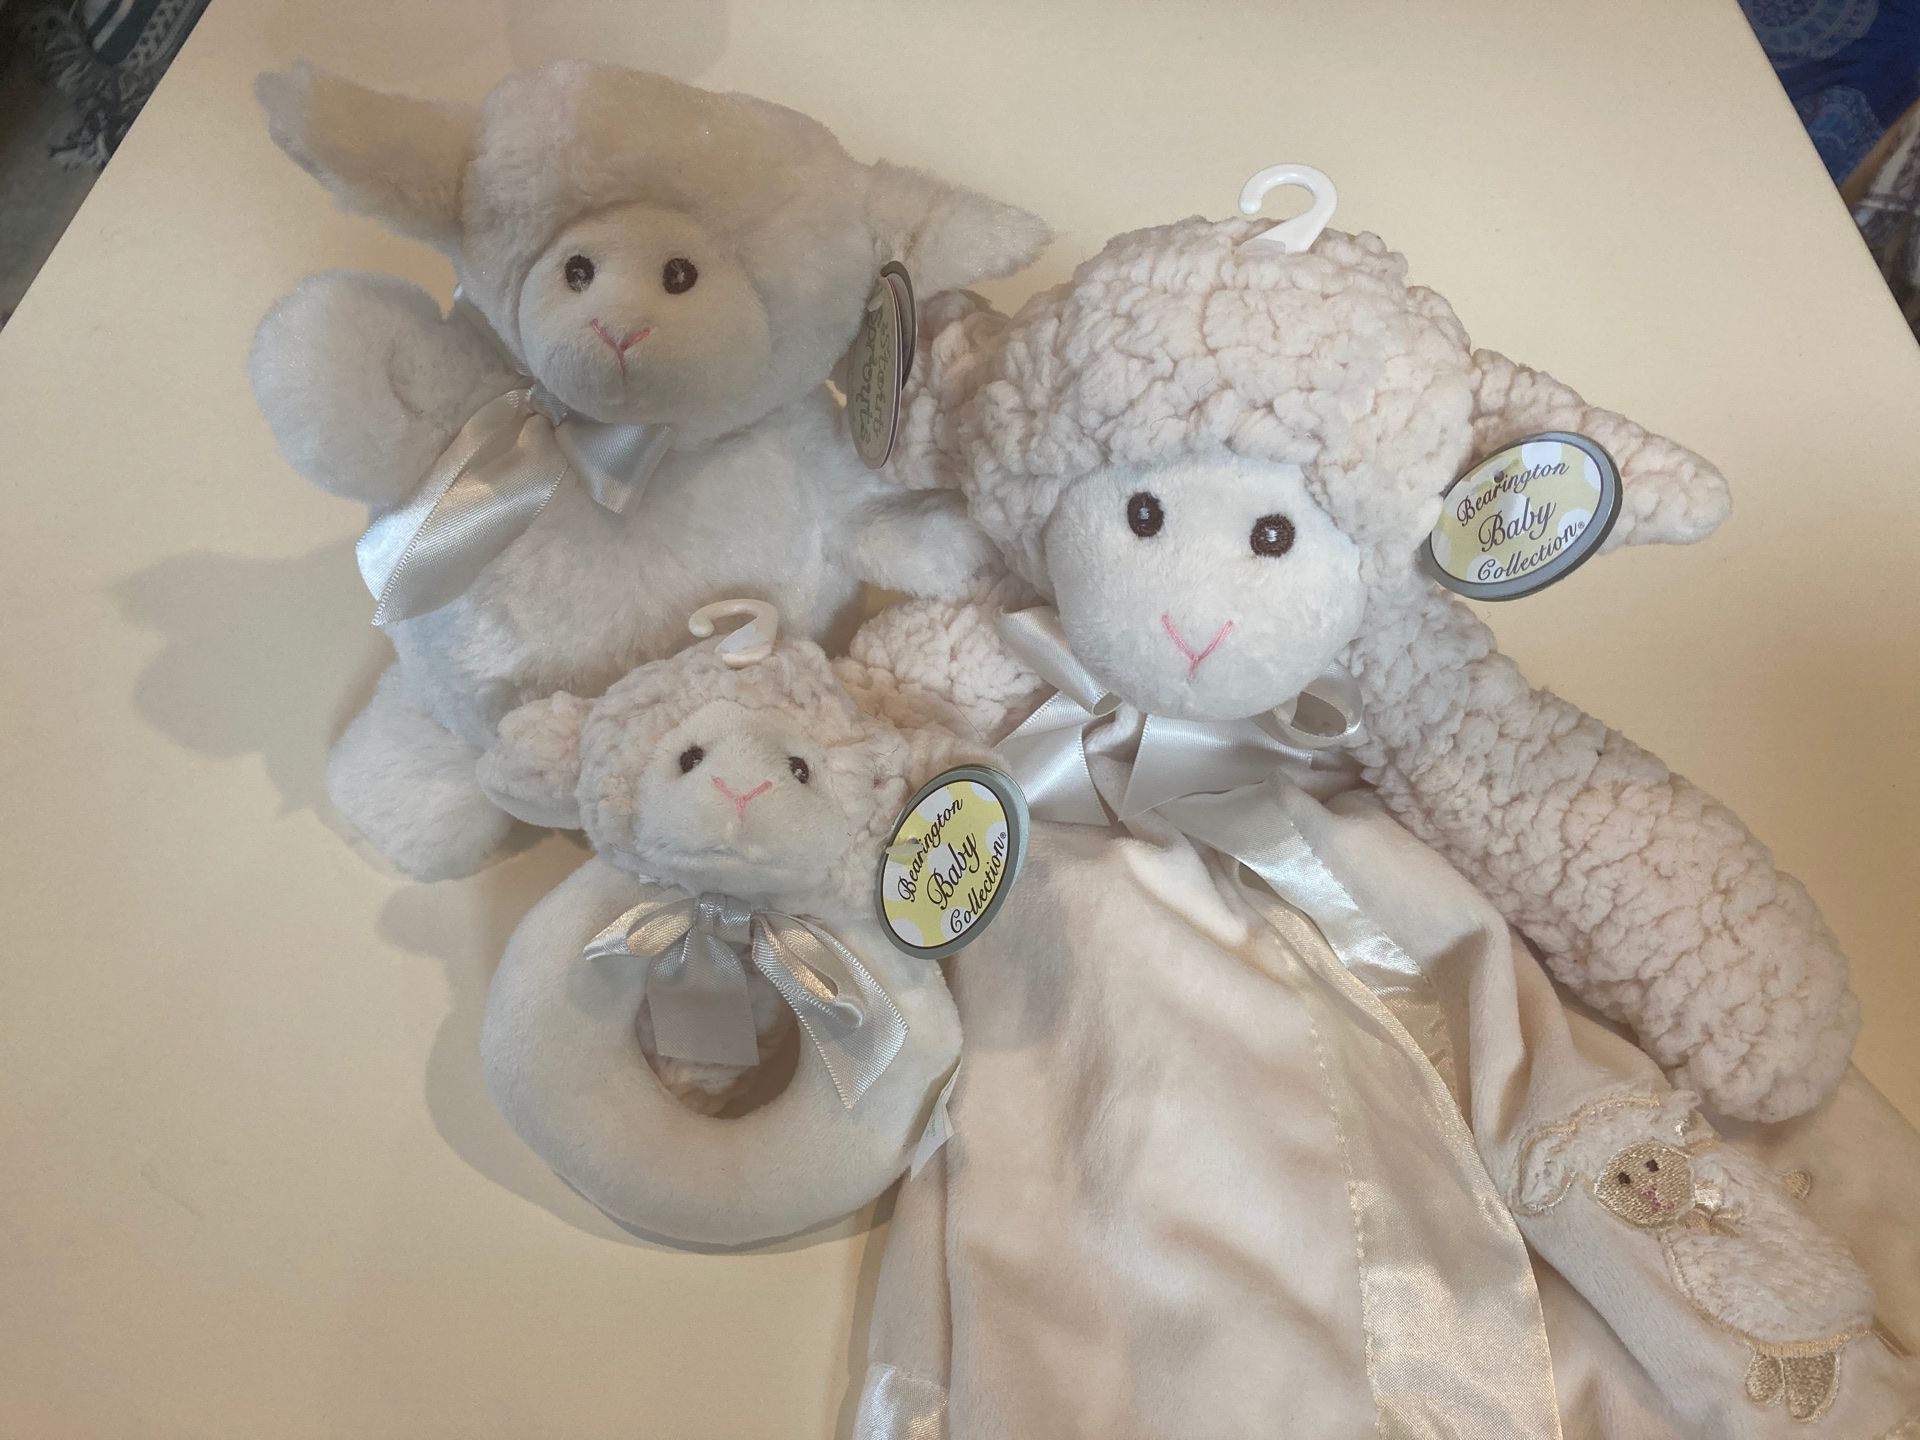 Bearington Baby Collection stuffed animal set